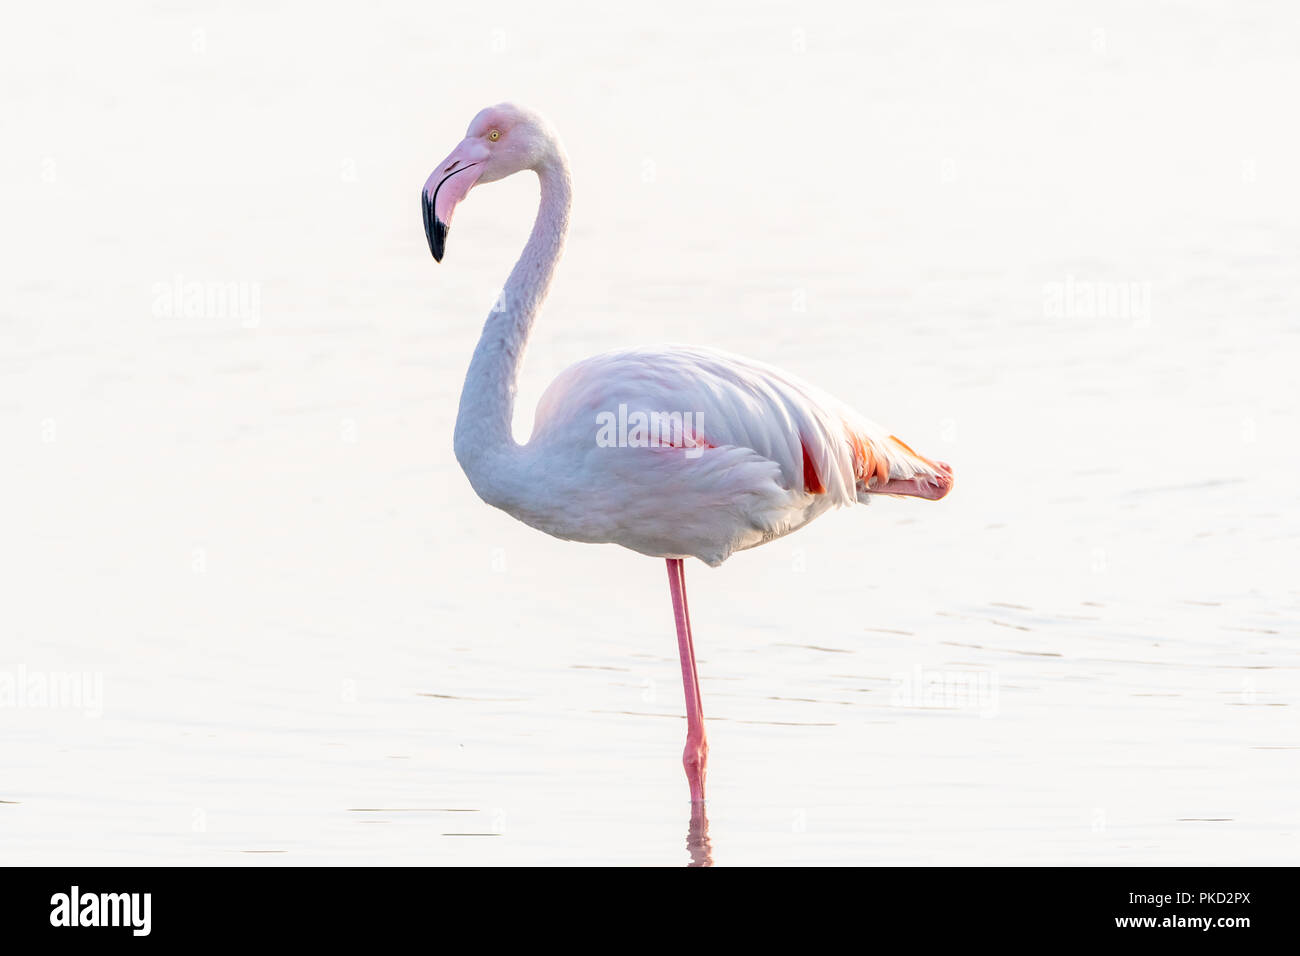 Perfect Balance: Grater Flamingo on One Leg Stock Photo